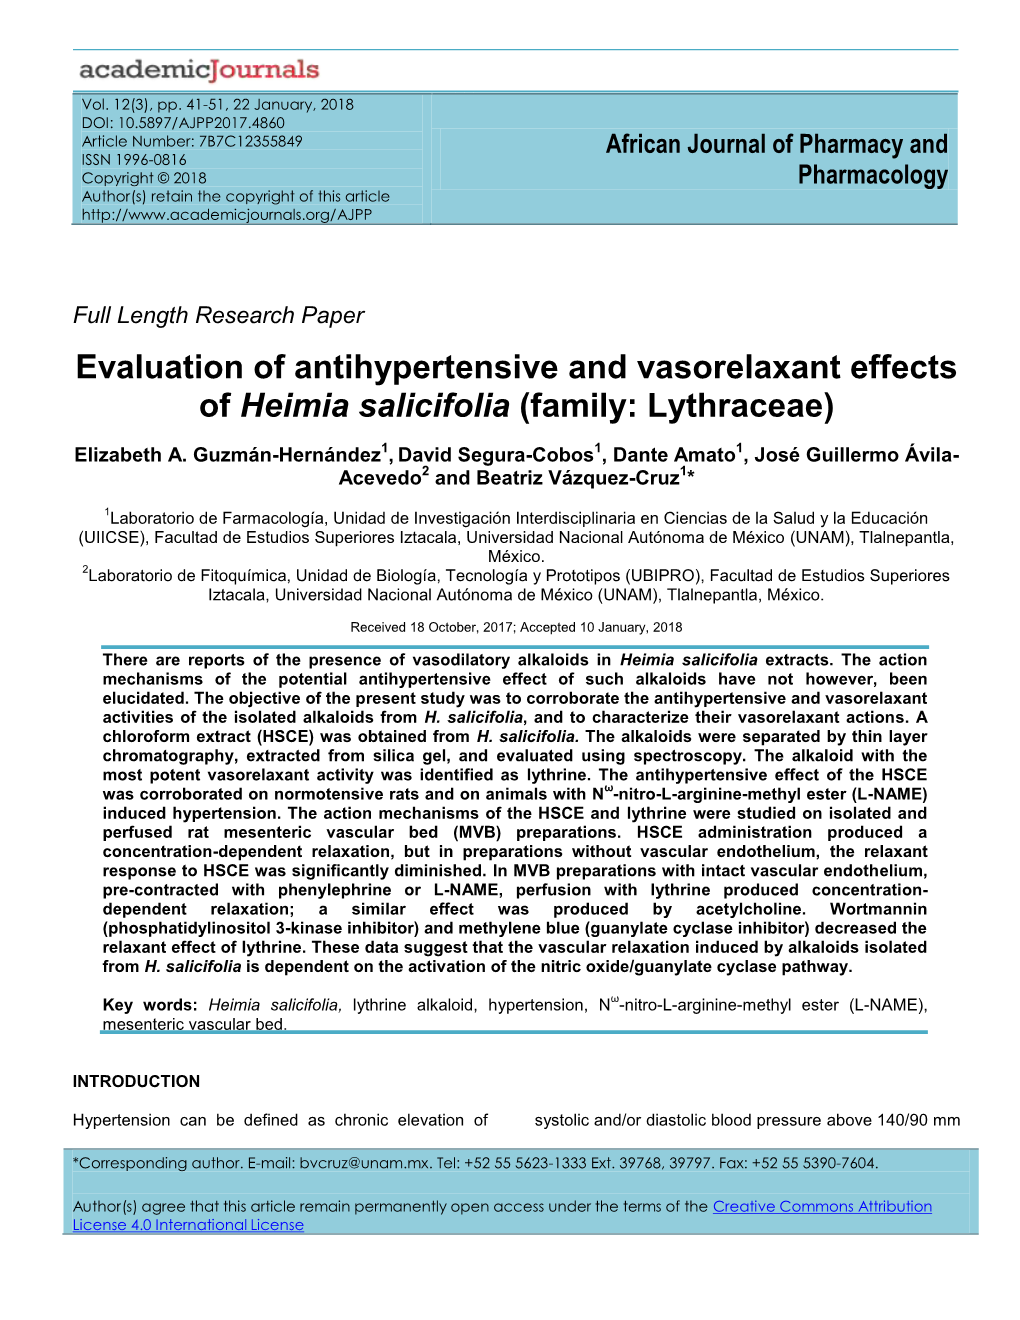 Evaluation of Antihypertensive and Vasorelaxant Effects of Heimia Salicifolia (Family: Lythraceae)